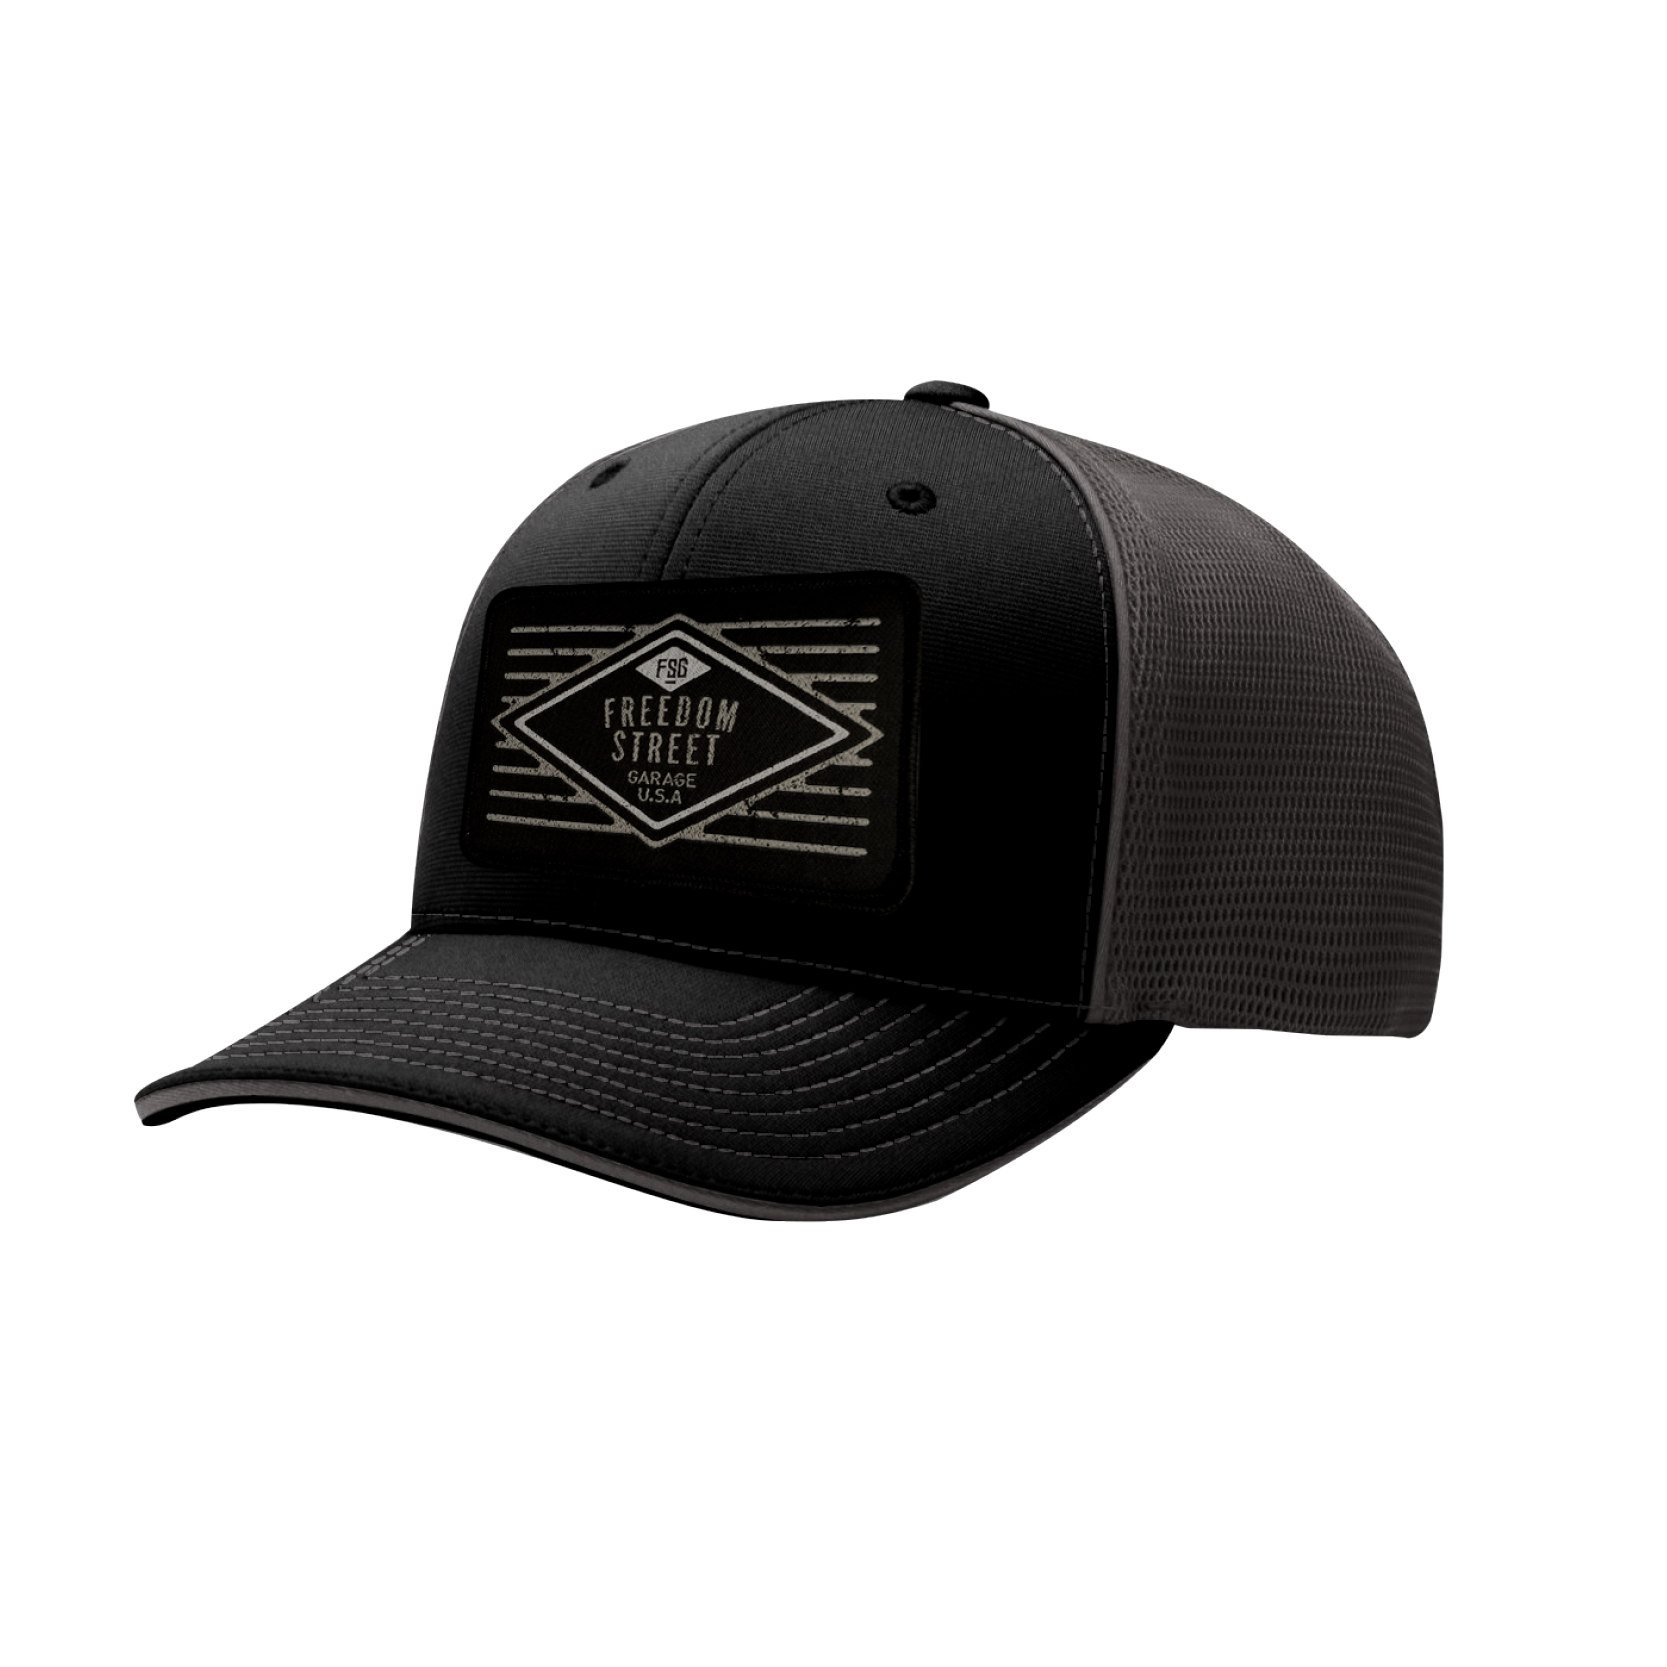 The Truckstop Grey/Black Flexfit Hat